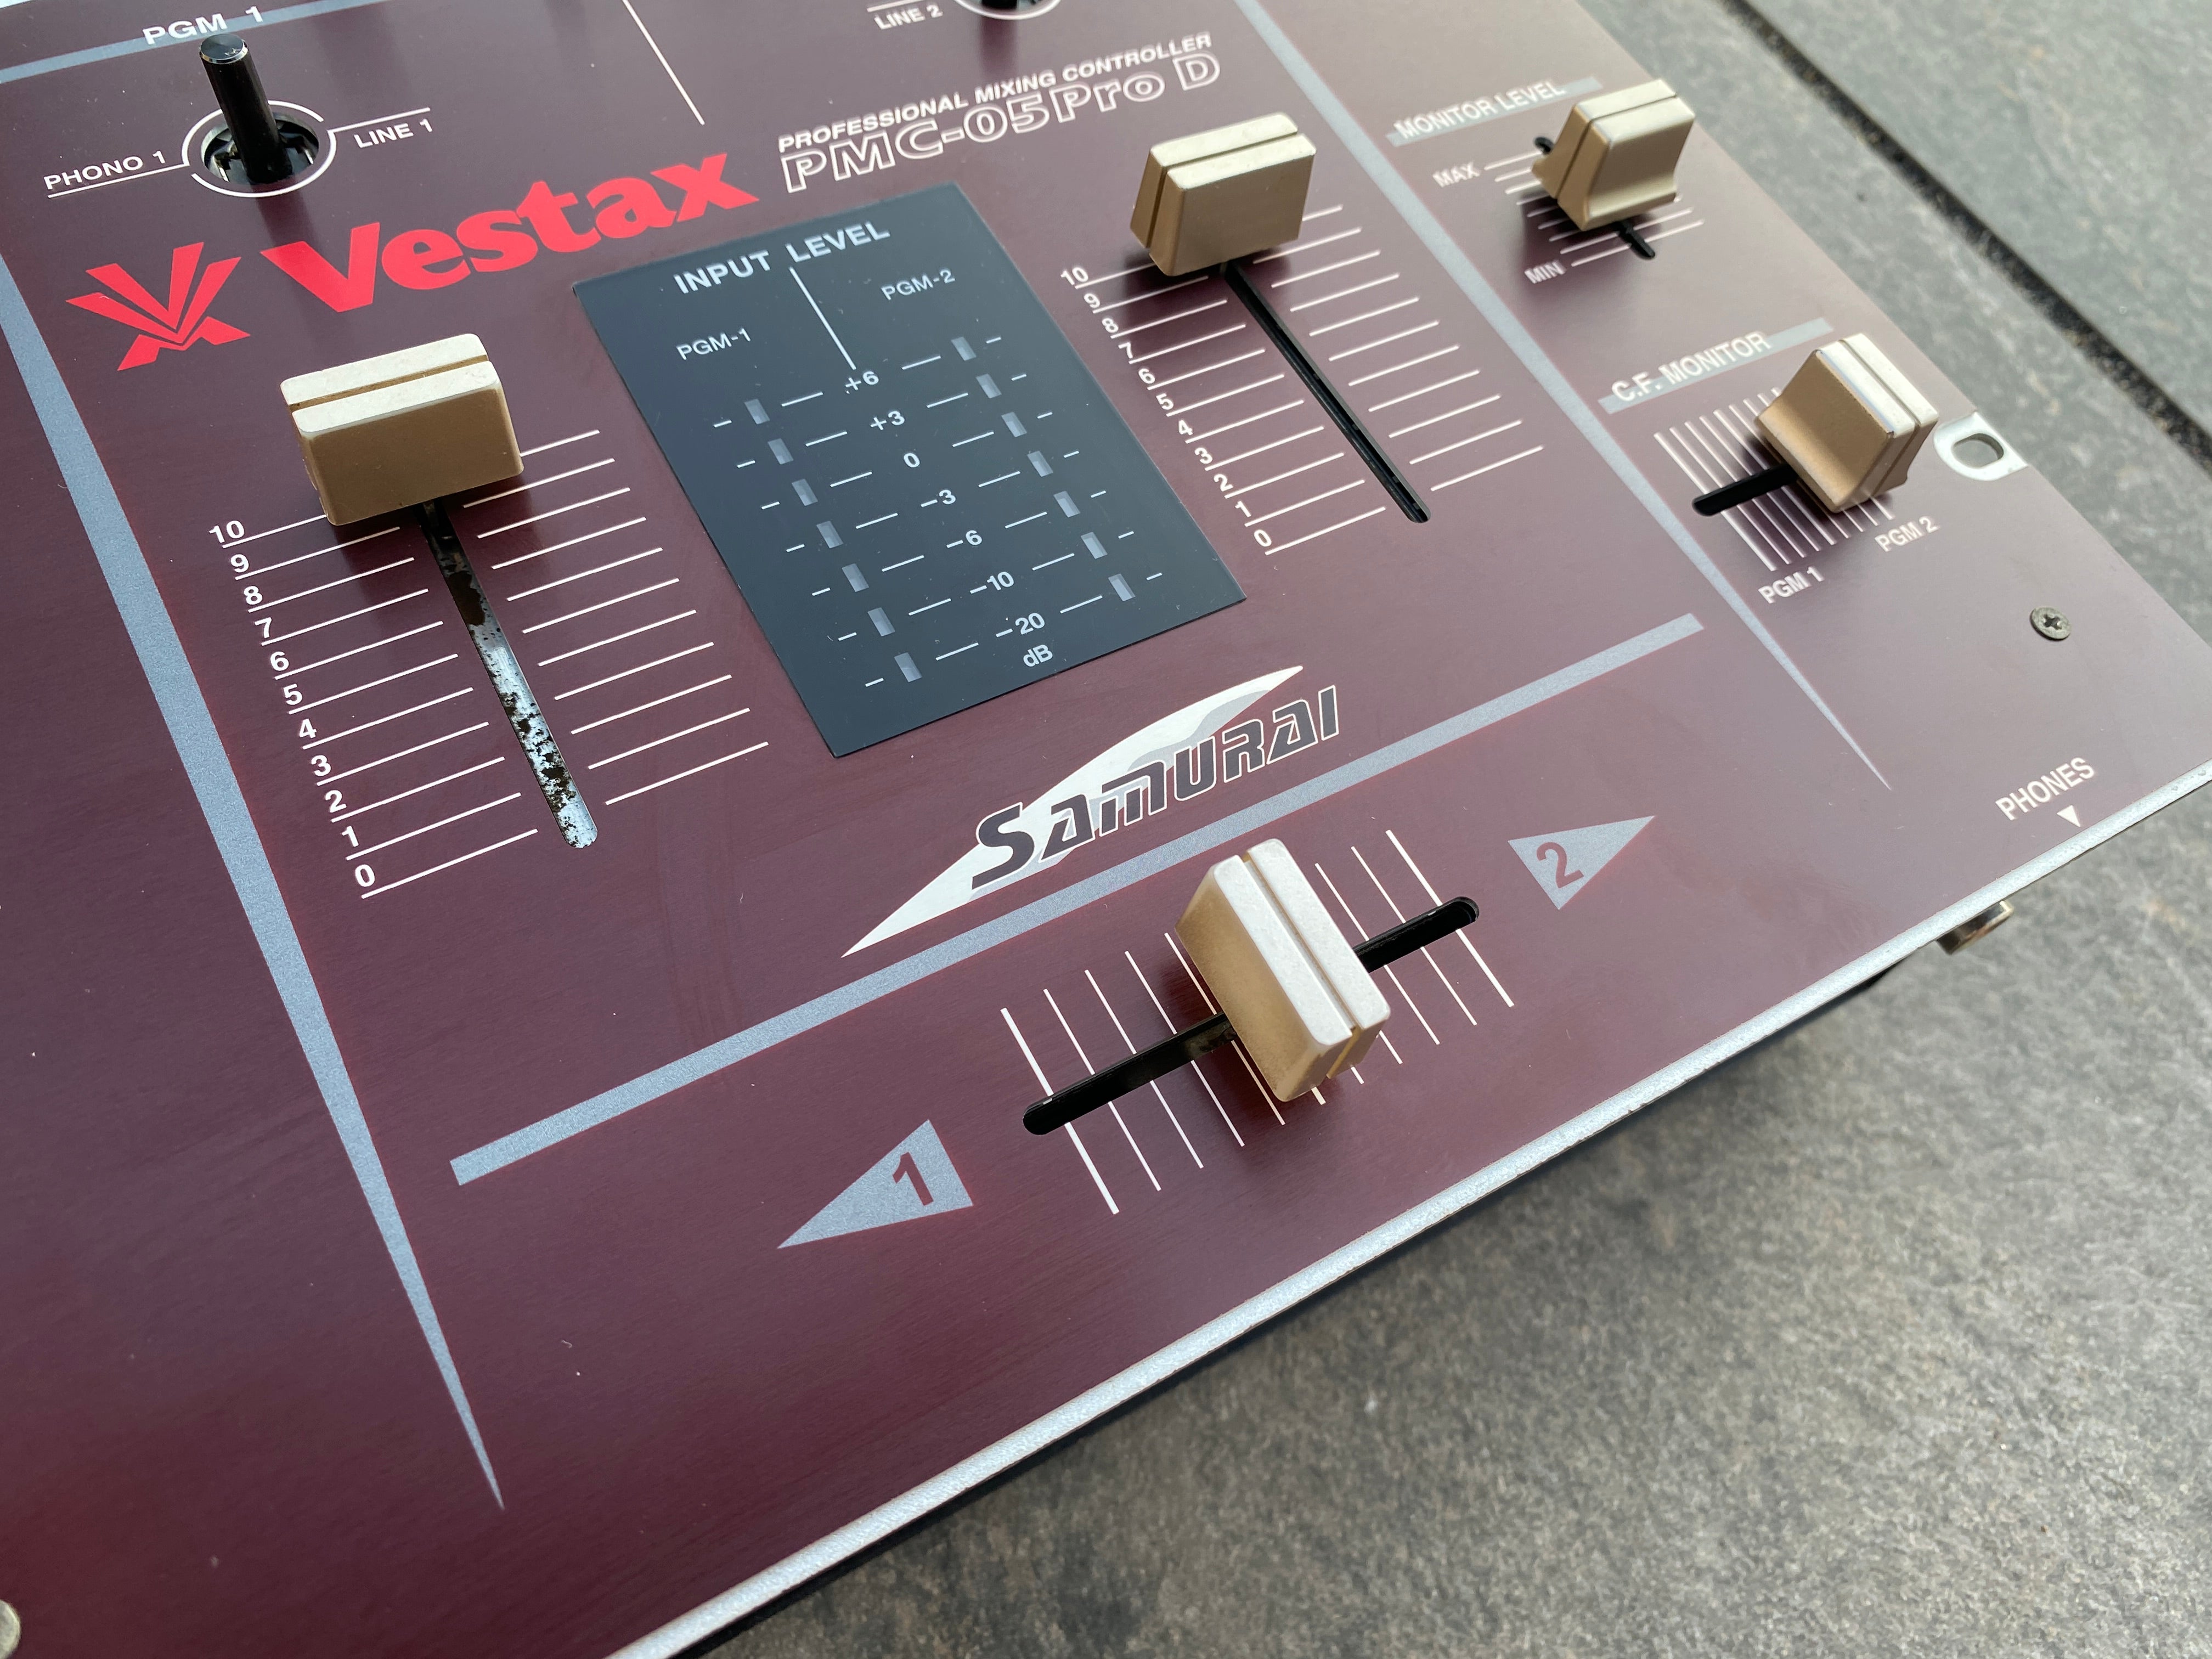 Vestax PMC-05 Pro D Samurai Mixer